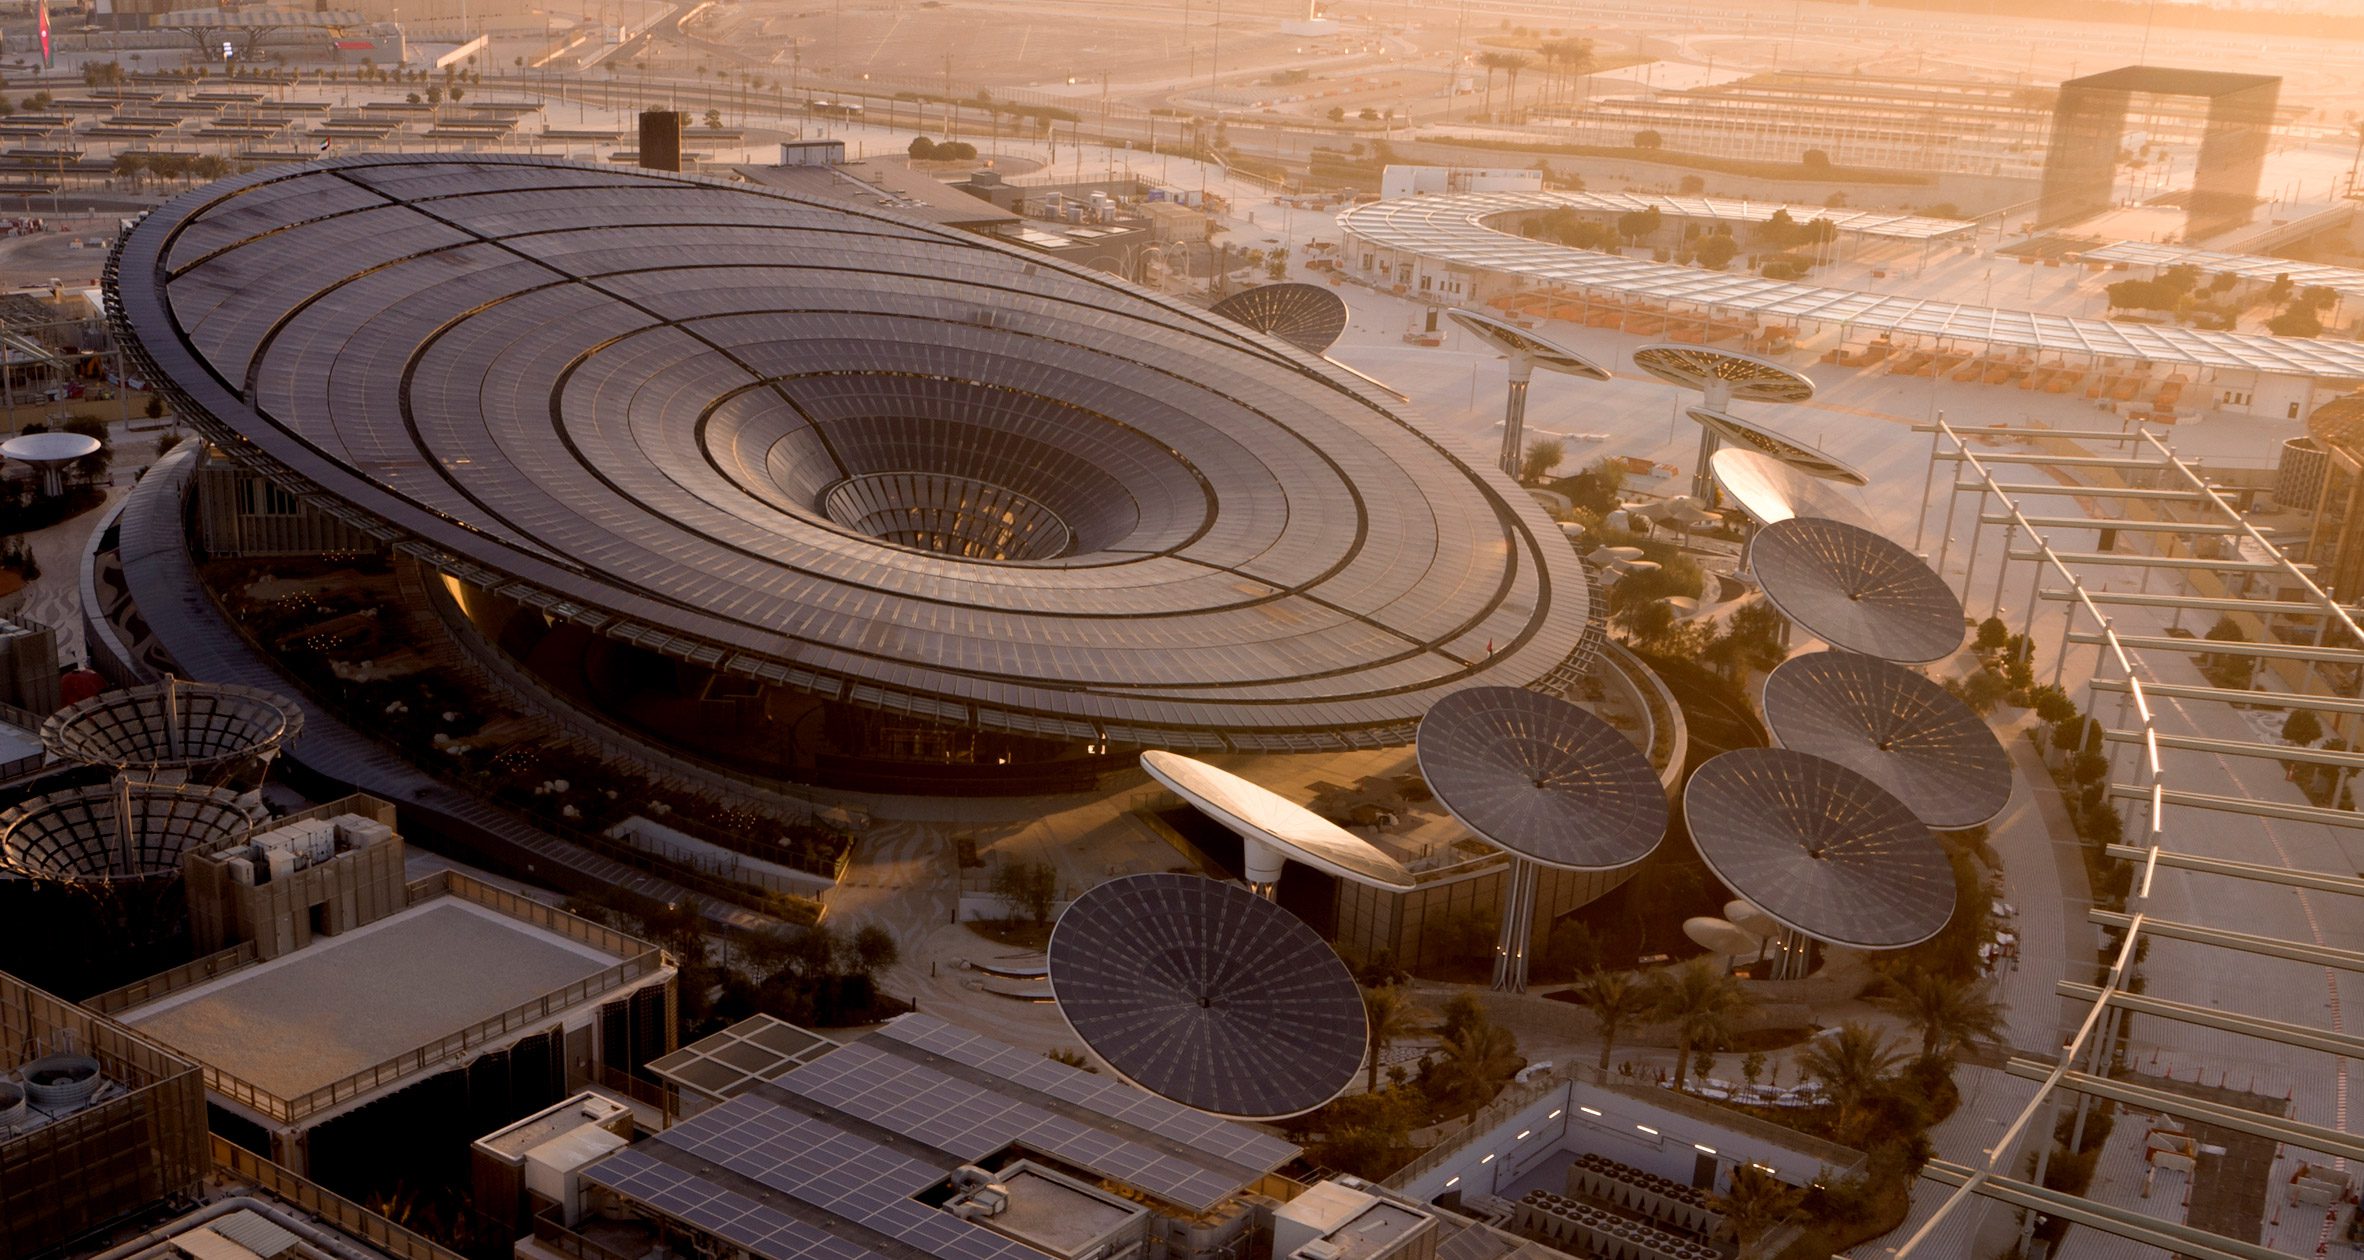 Solar panel-topped pavilion at Dubai Expo